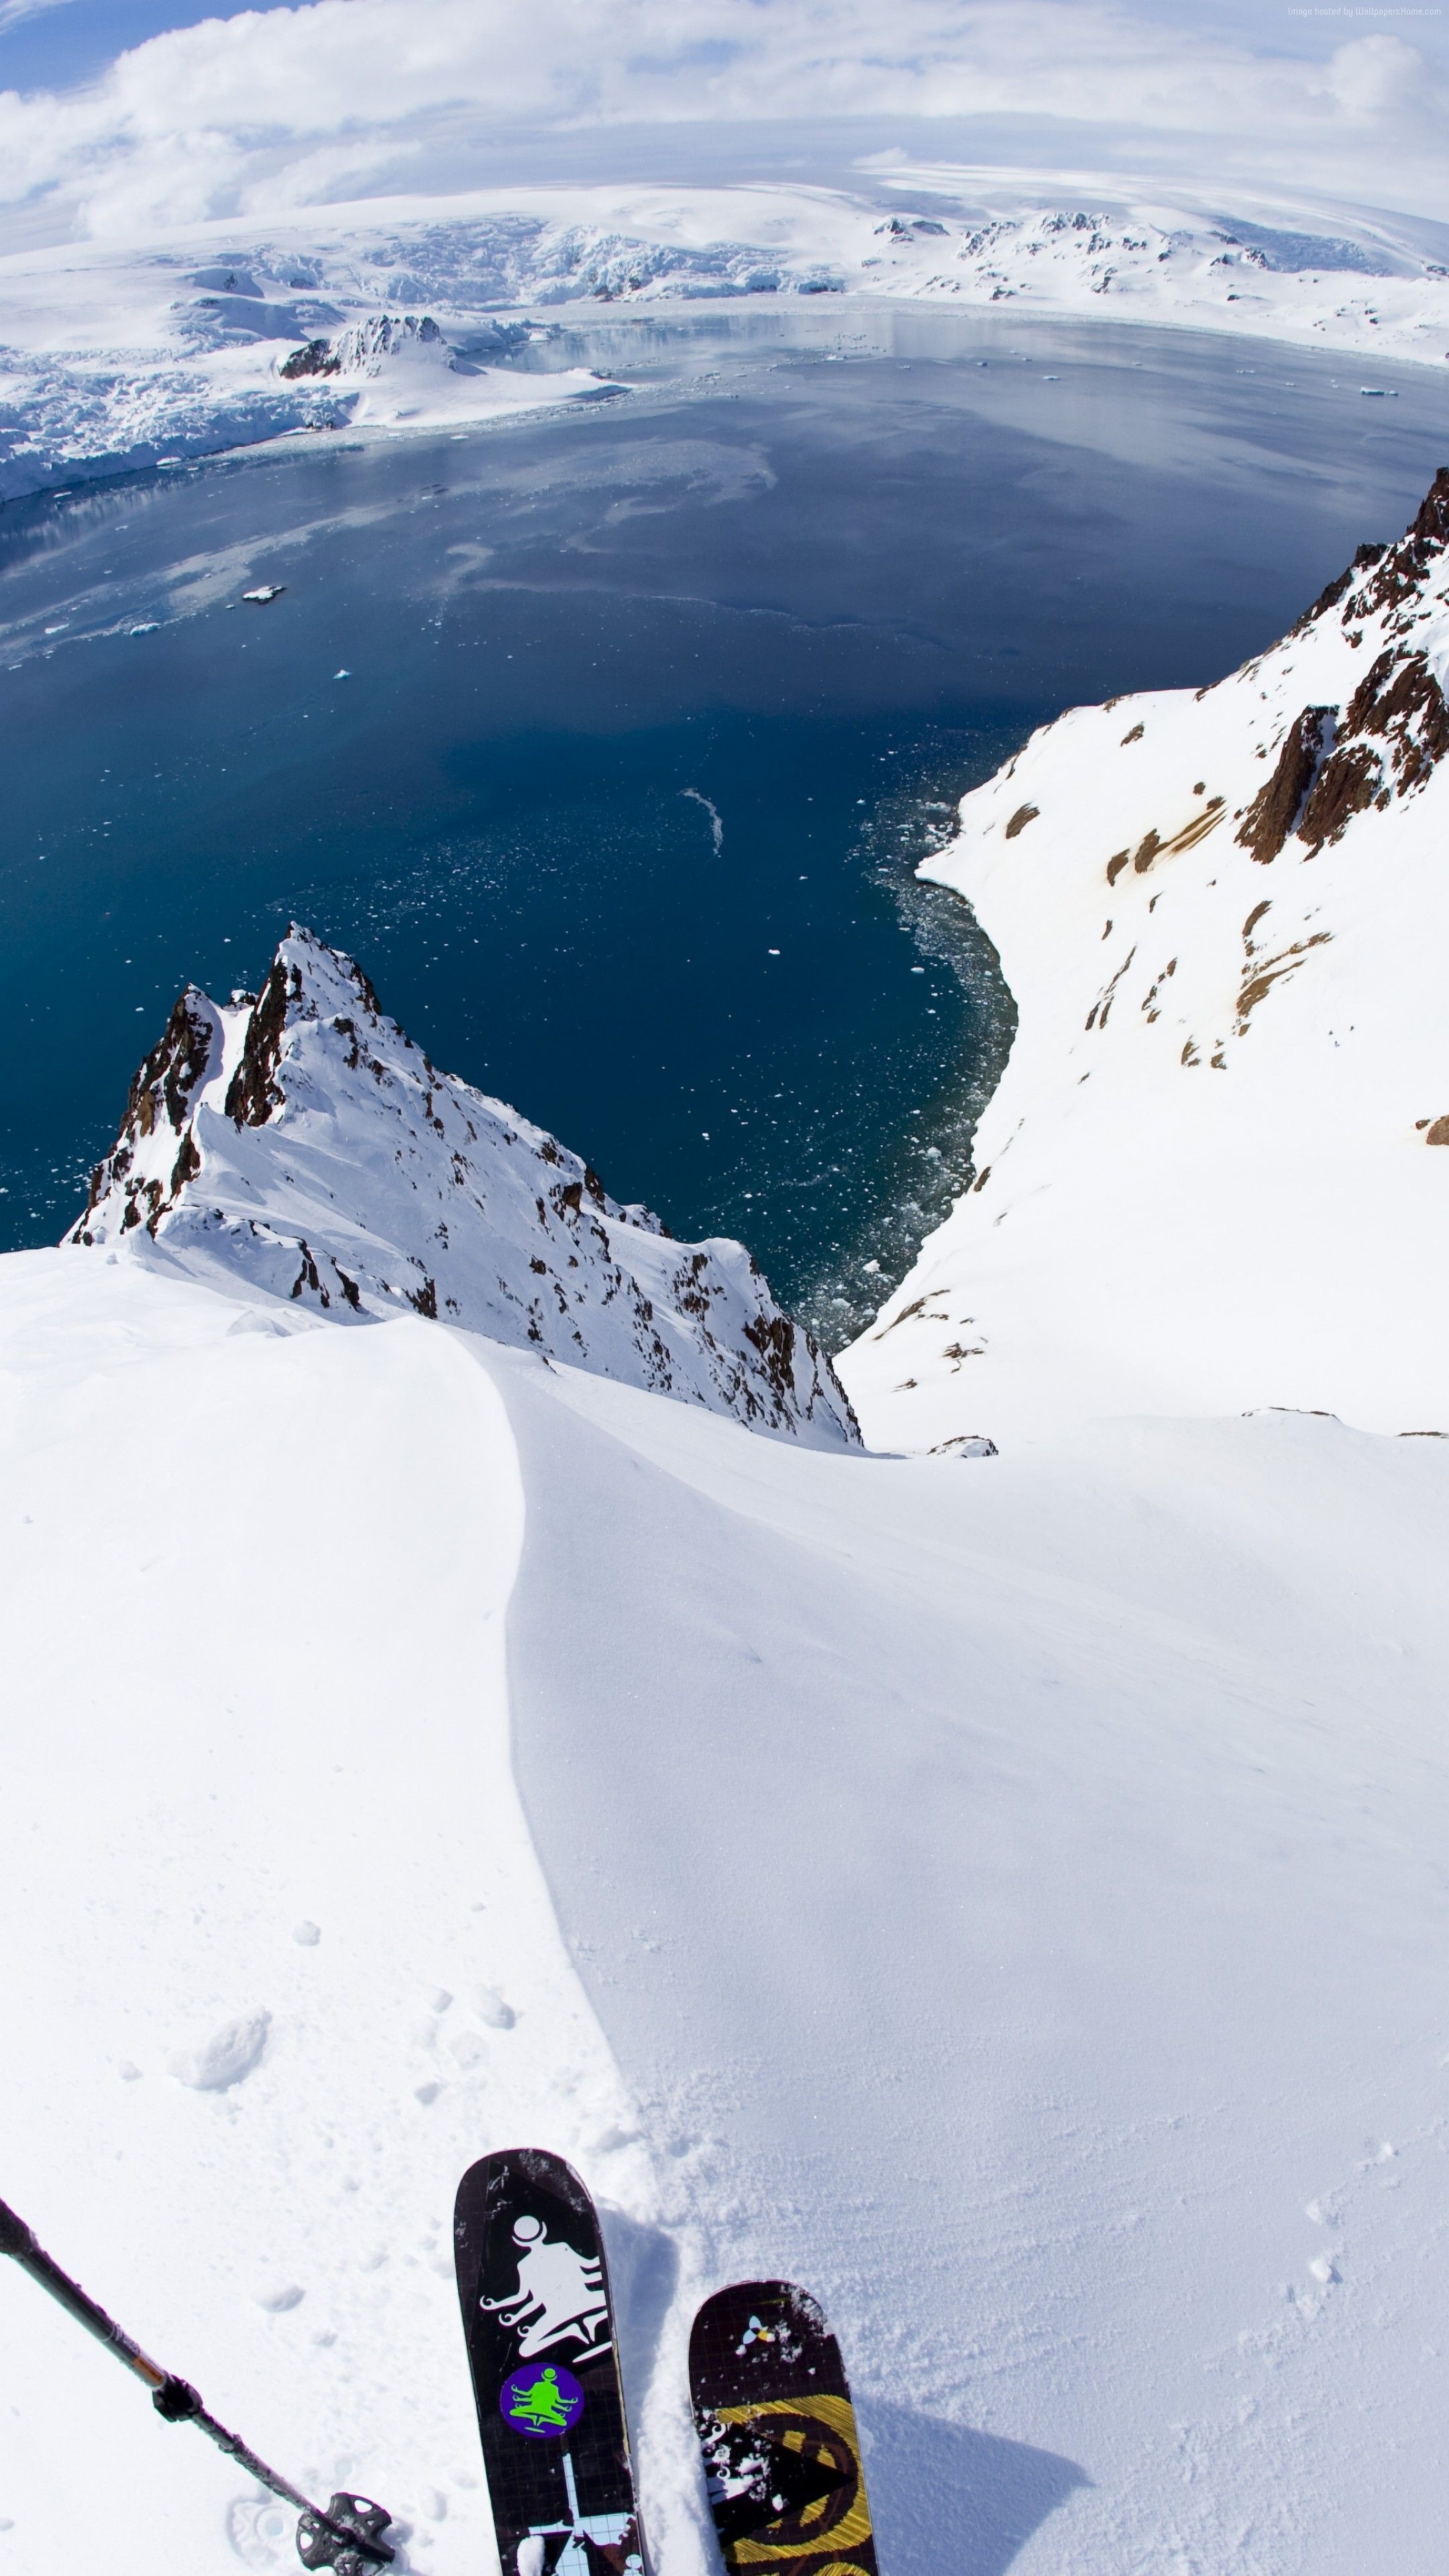 Alpine Skiing: The sport of gliding on snow, Downhill, Winter activity, Mountain. 2160x3840 4K Wallpaper.